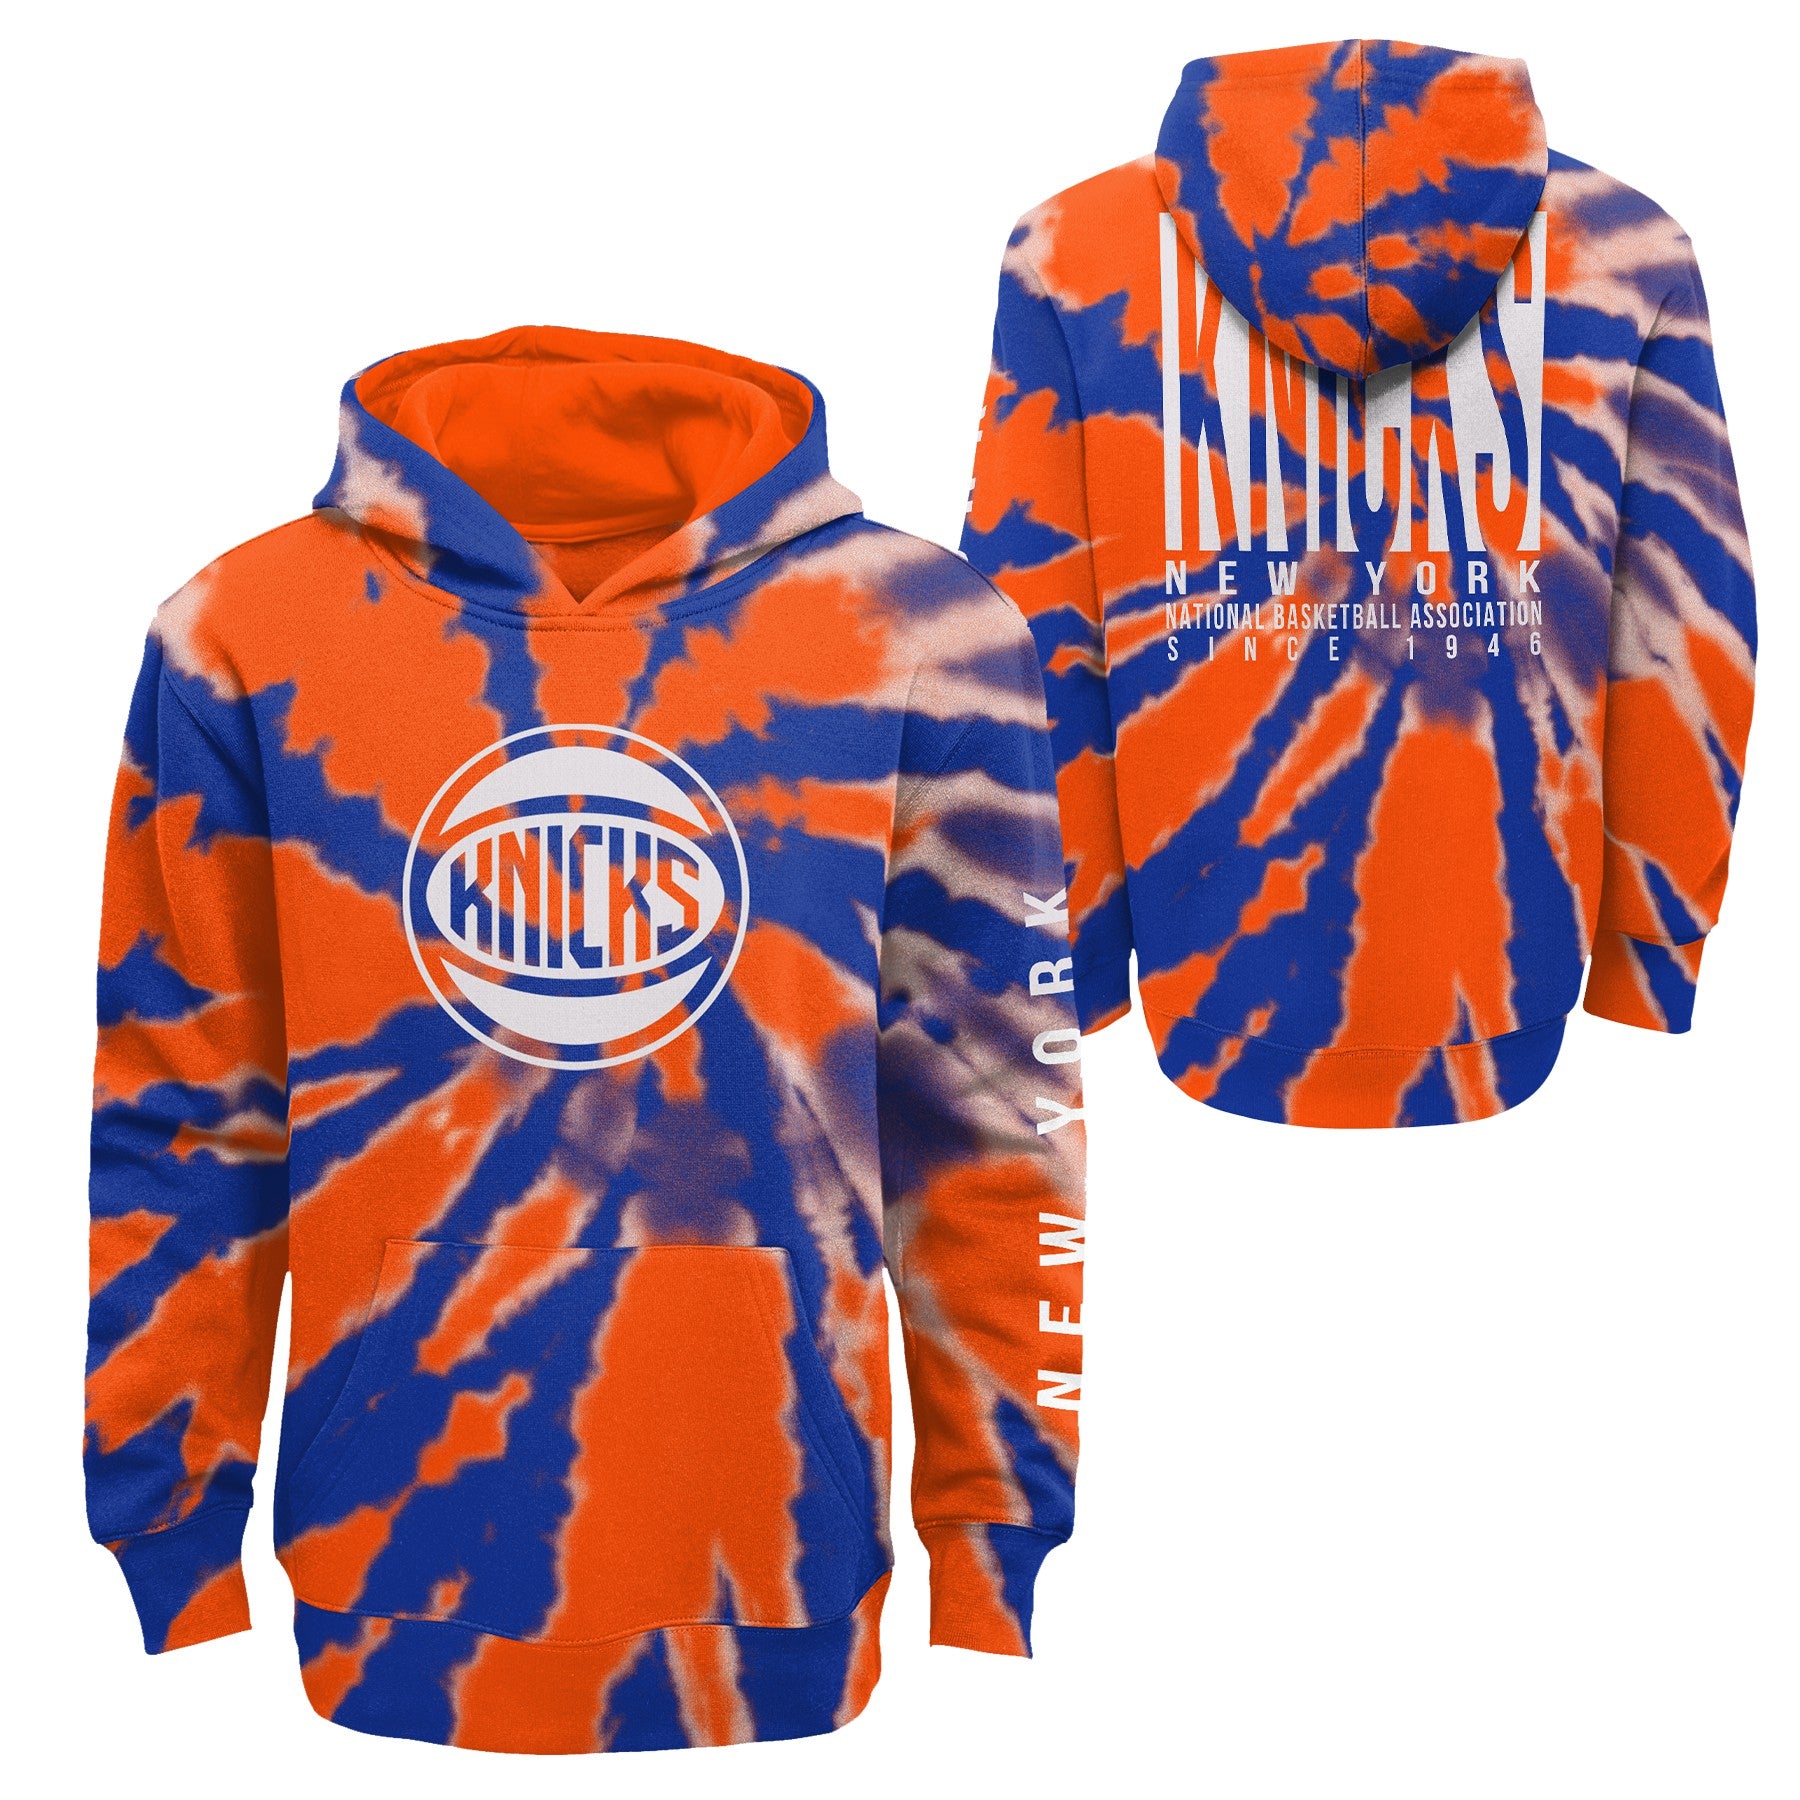 Hybrid New York Knicks Orange Tie Dye in Size XL - $14 - From Mary